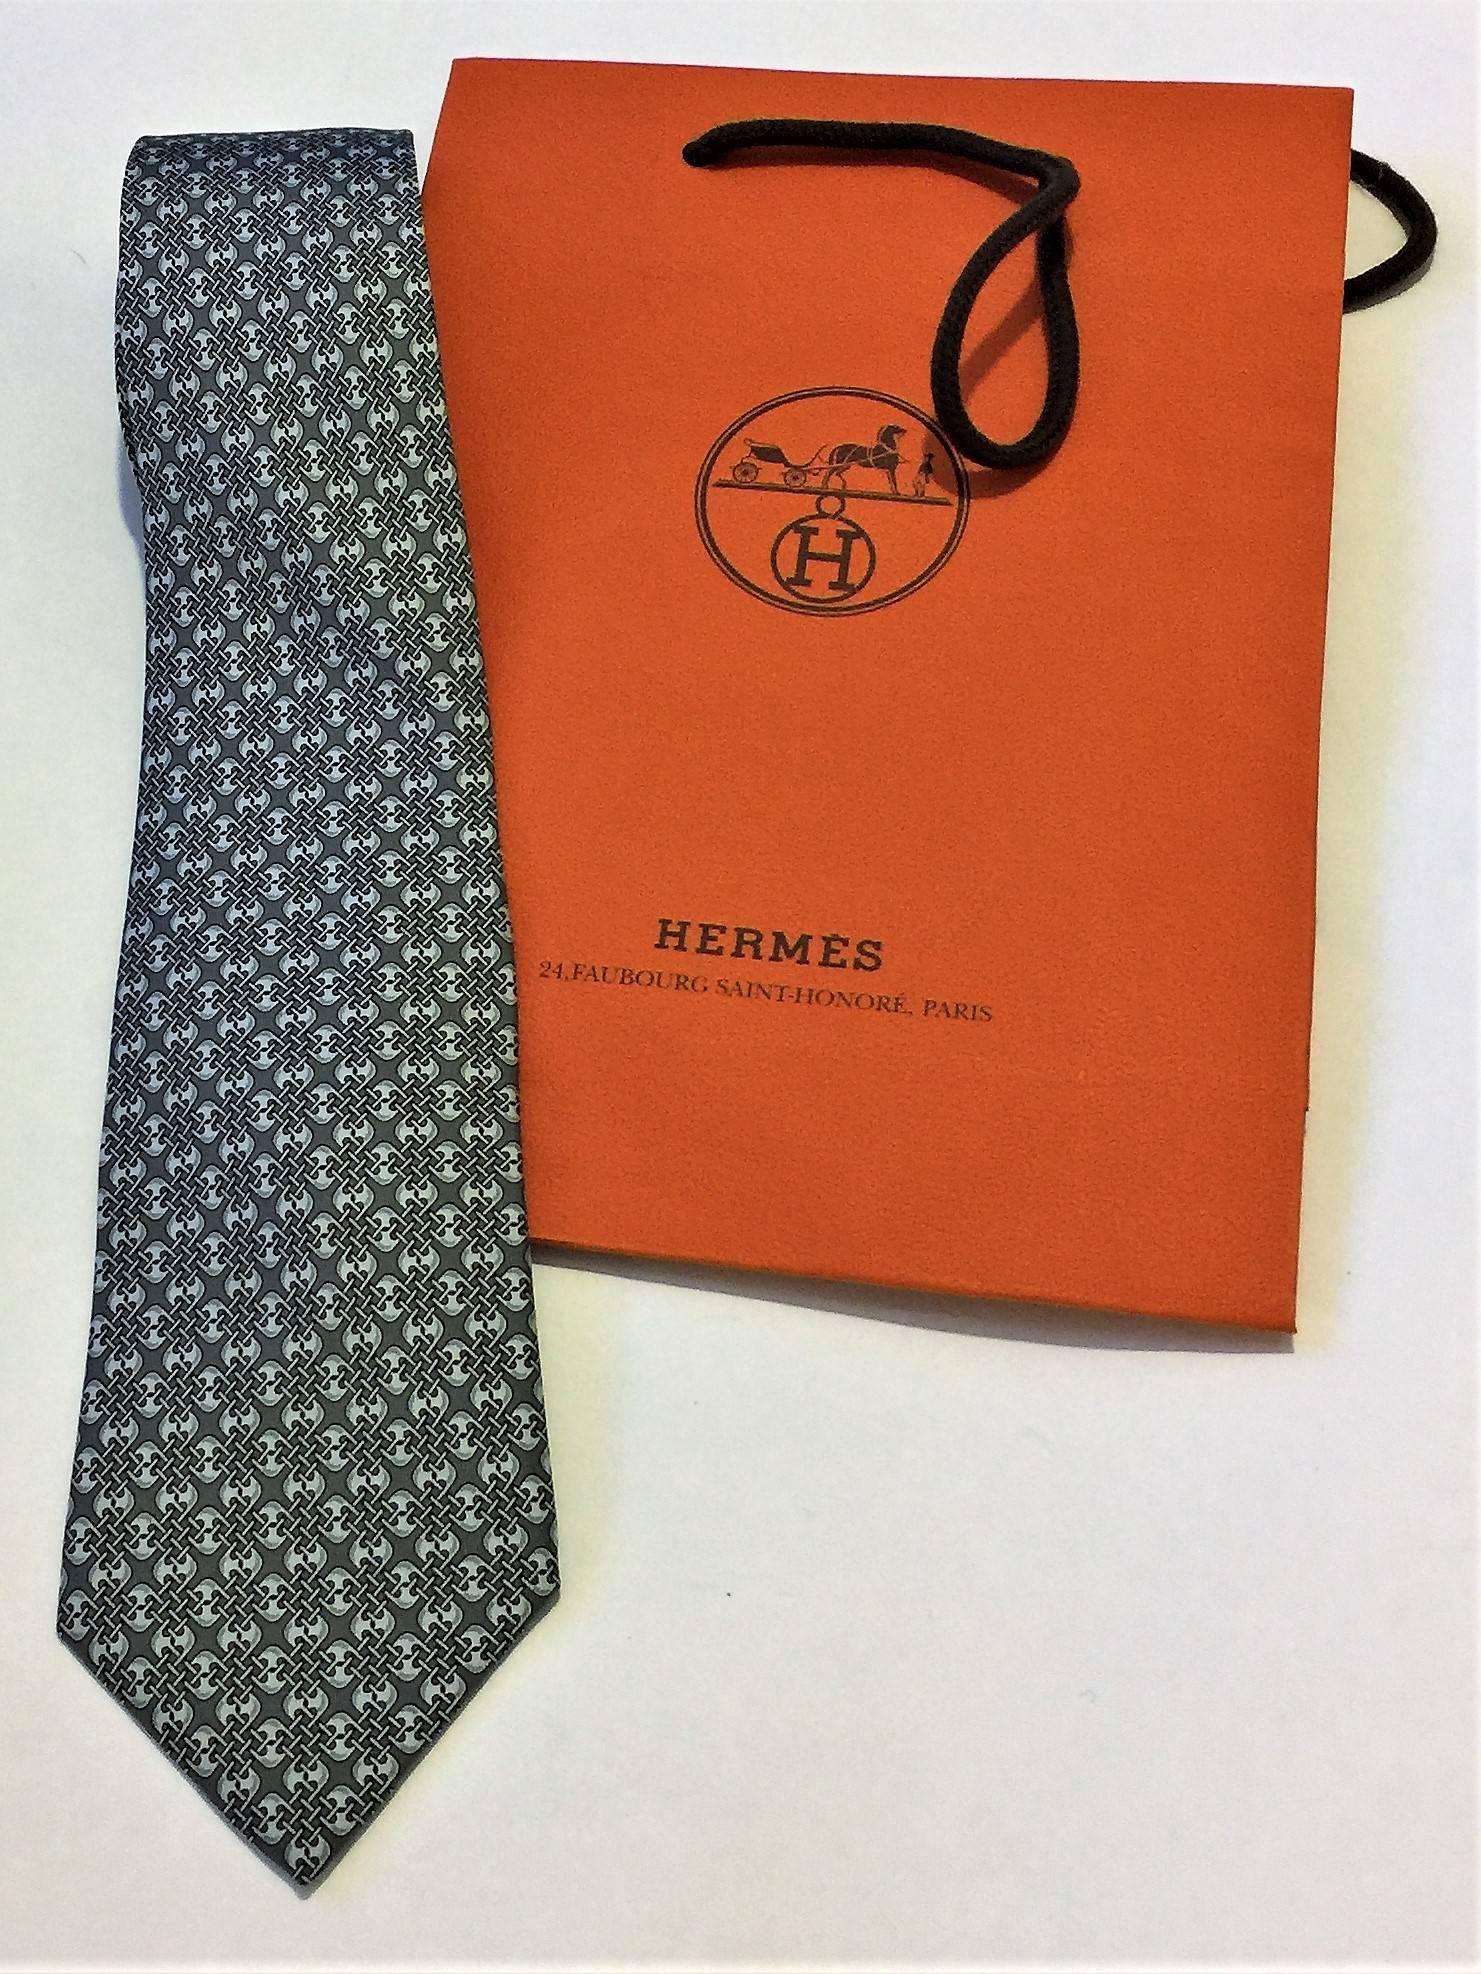 HERMES Paris Classic Men’s Tie.  3